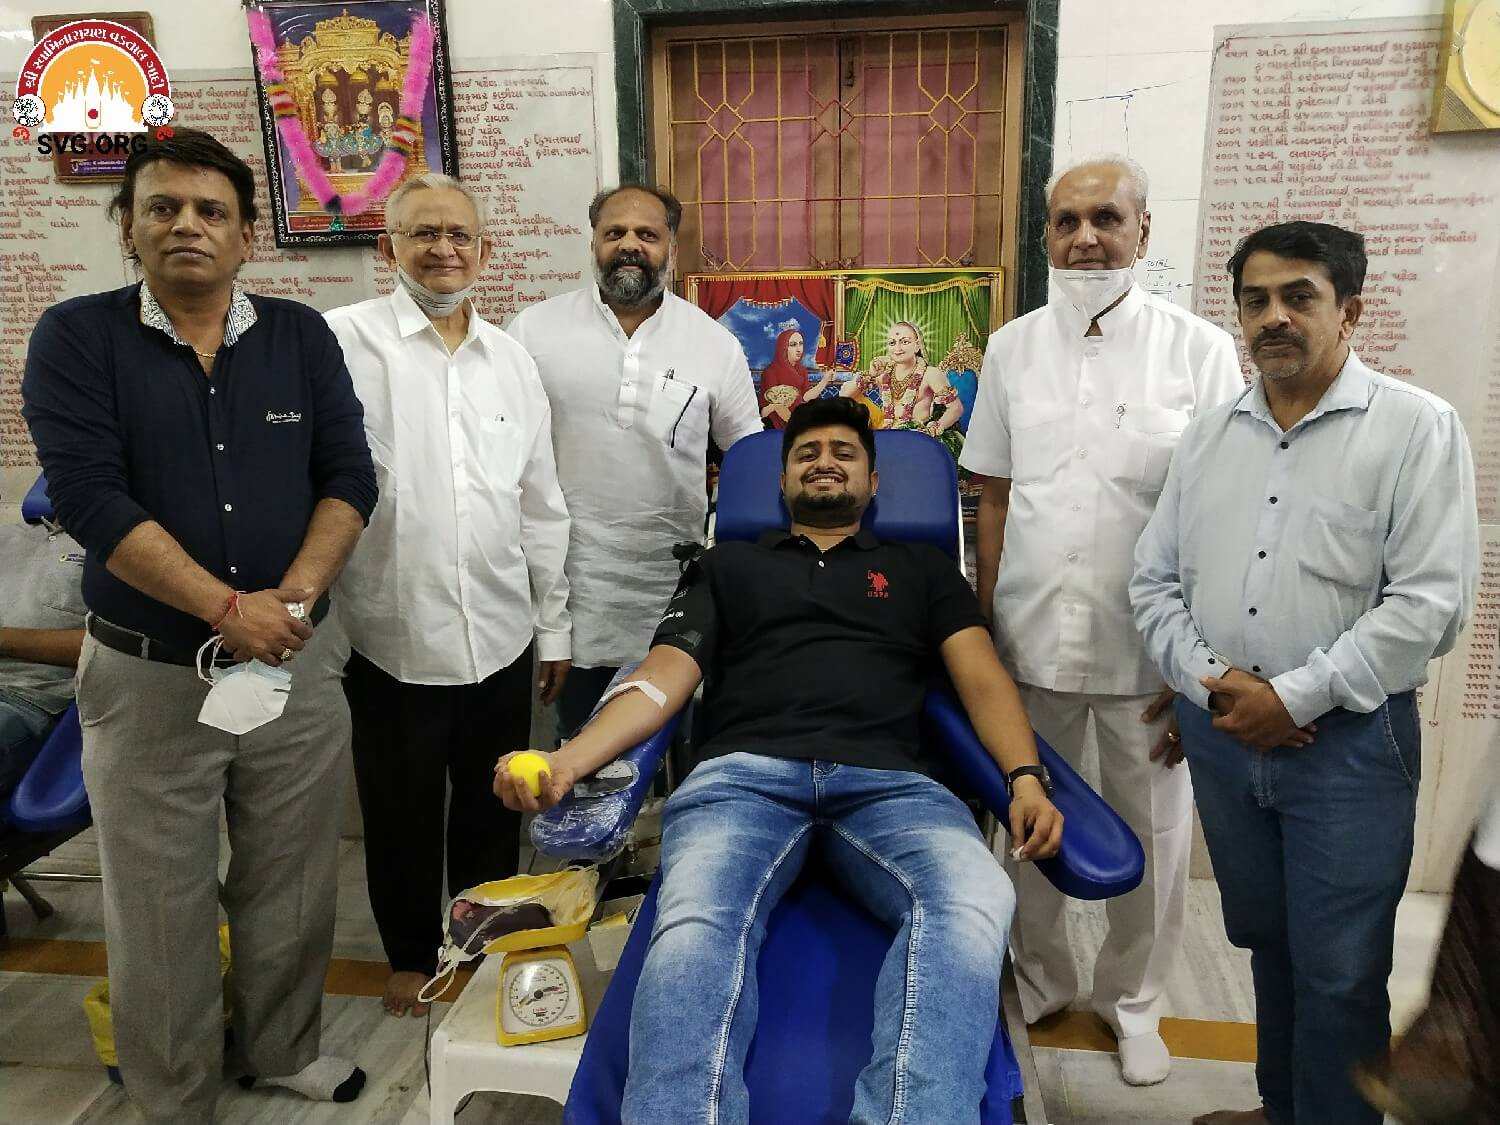 SVG Charity Blood Donation Camp Malad Mumbai 19 Dec 2021 31